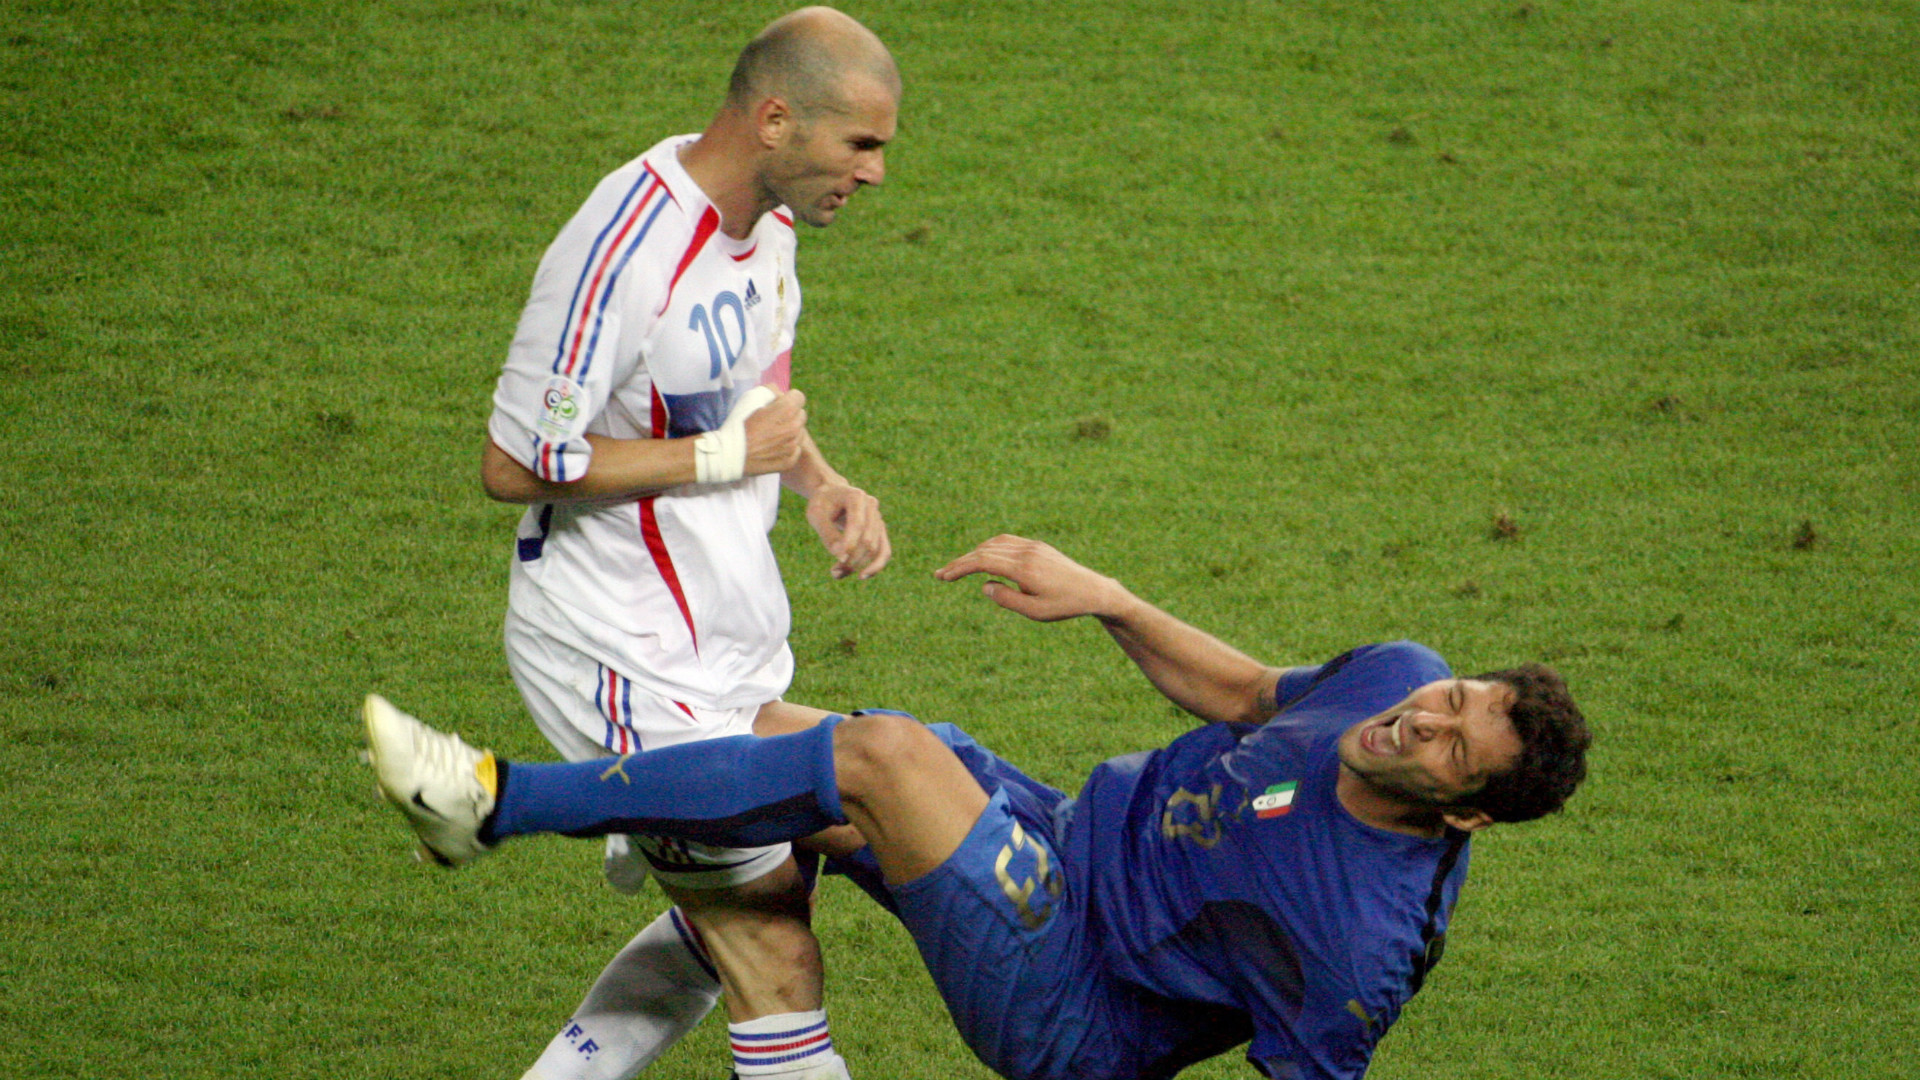 materazzi zidane francia italia final mundial alemania 2006 39fjsjo0ghjgz8d0873t65jh